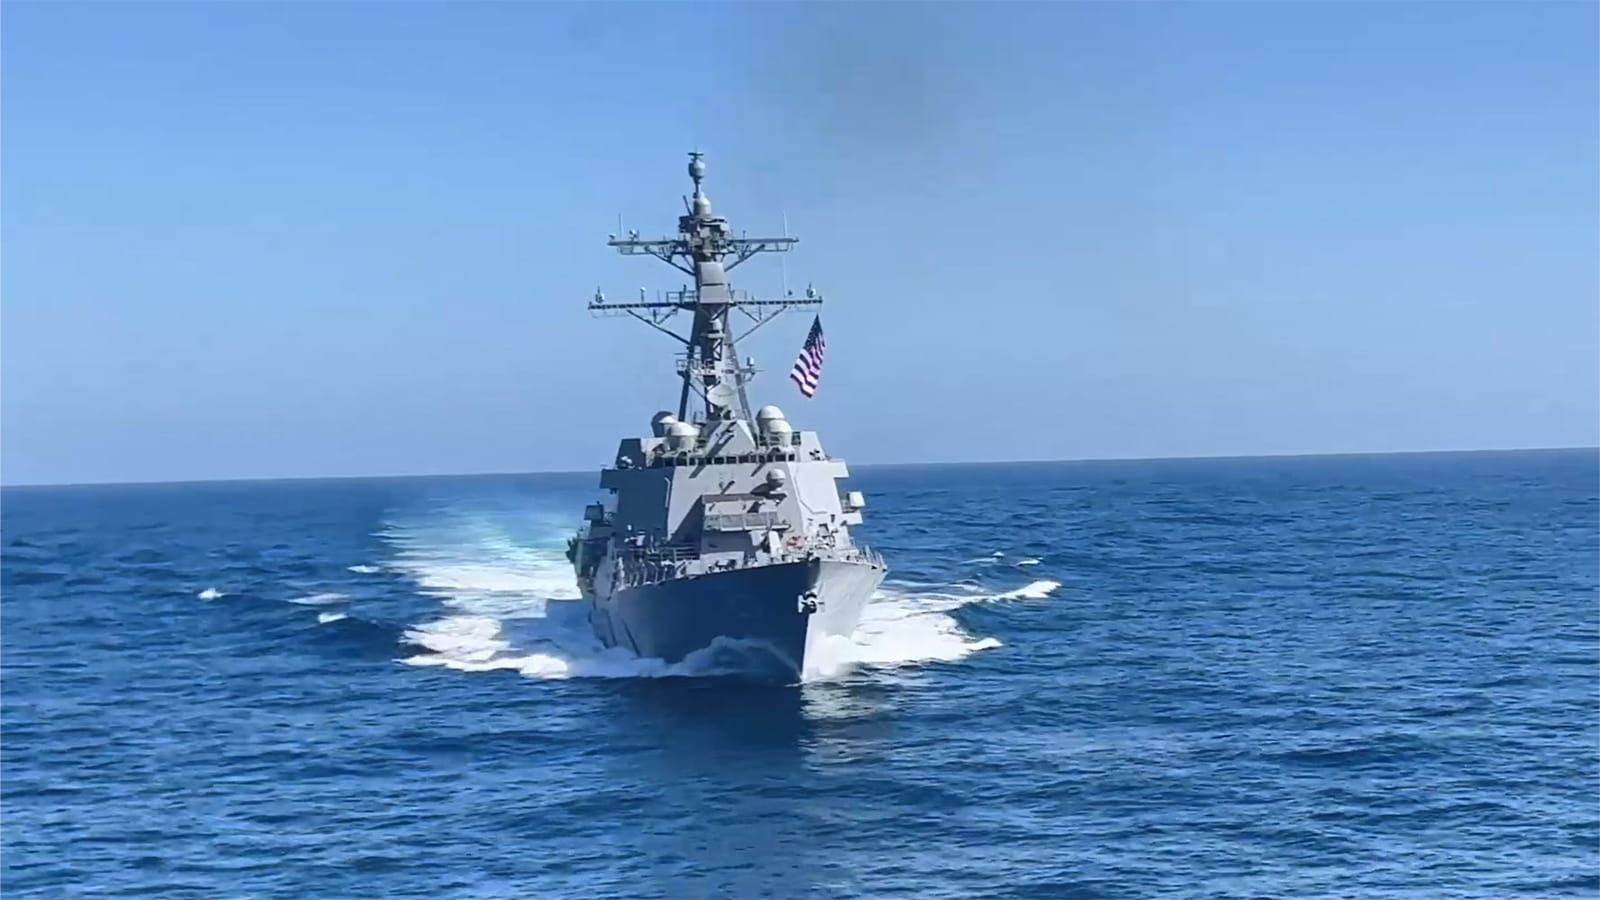 A U.S. Navy destroyer ship flying a U.S. flag cuts through blue ocean waters against a clear blue daytime sky